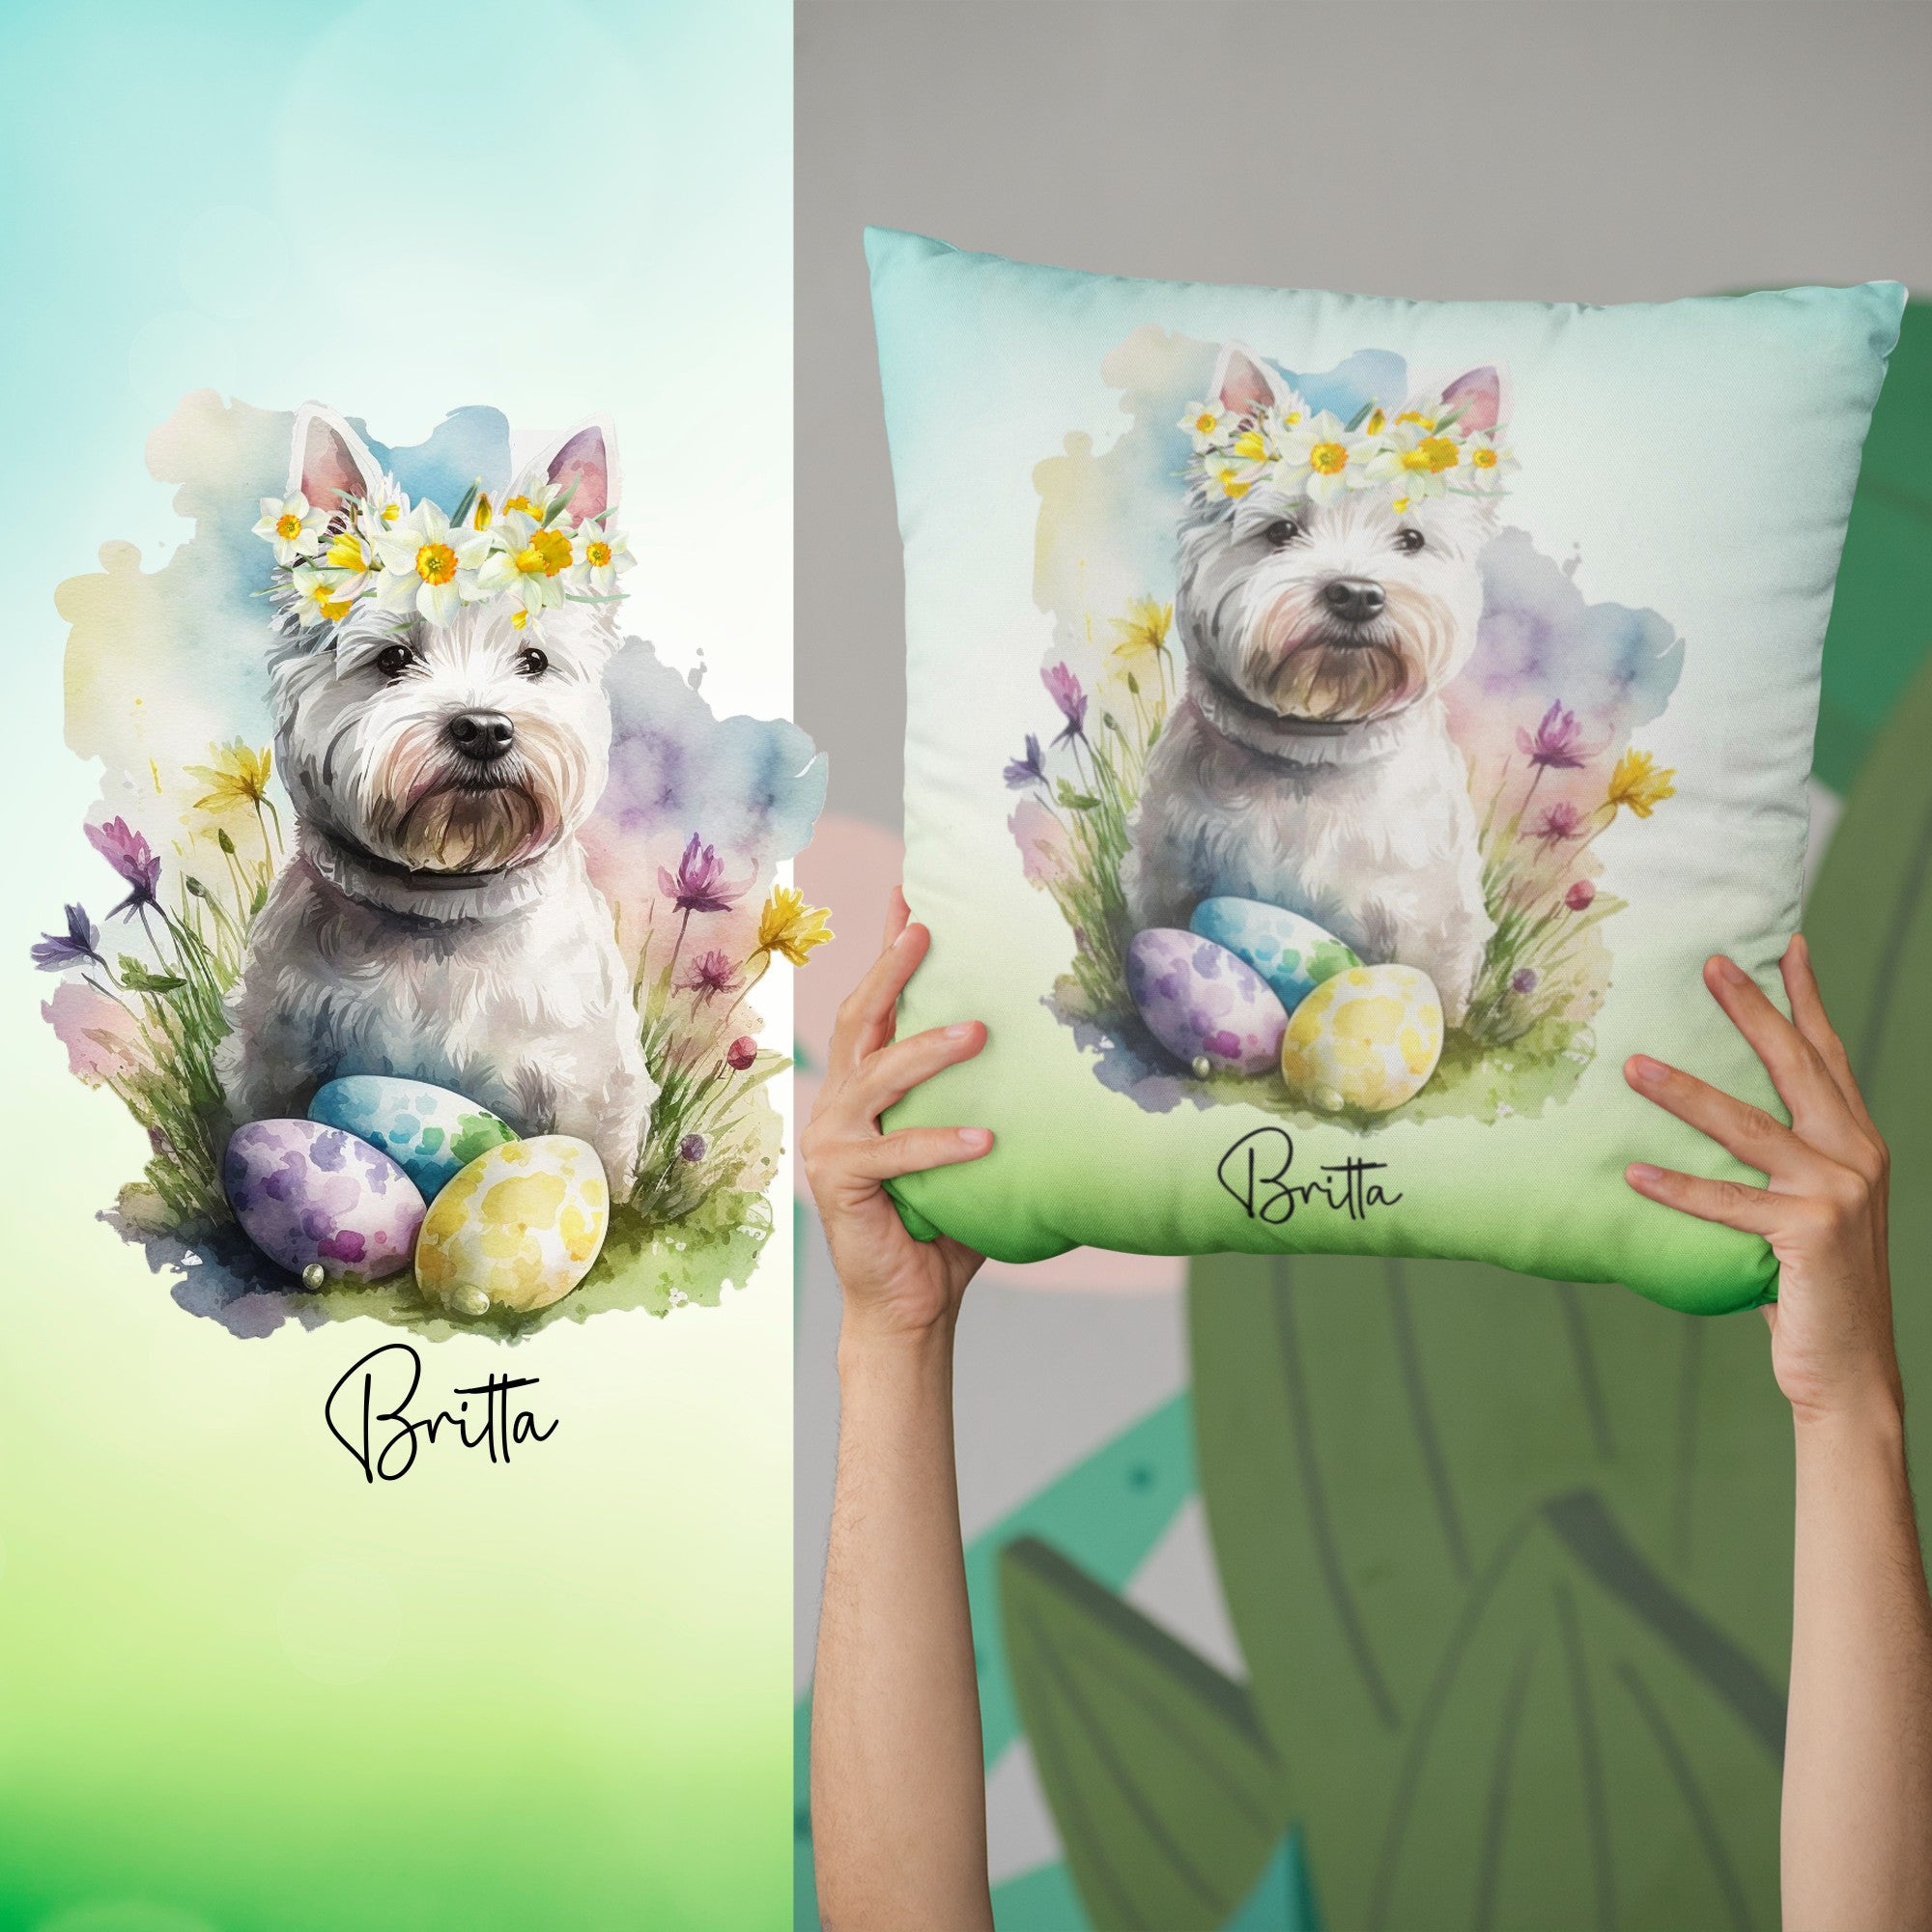 Personalised Westie Decorative Cushion - Sweetie